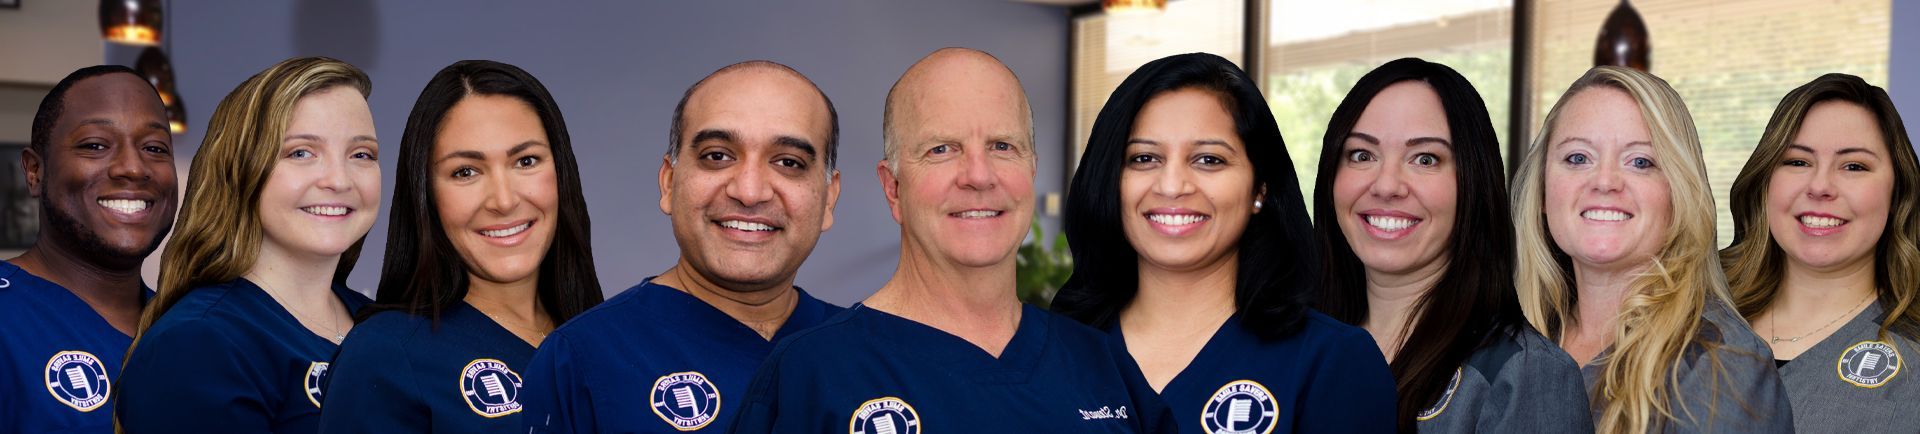 Smile Savers Dentistry, Dr Daniel Stewart and associates